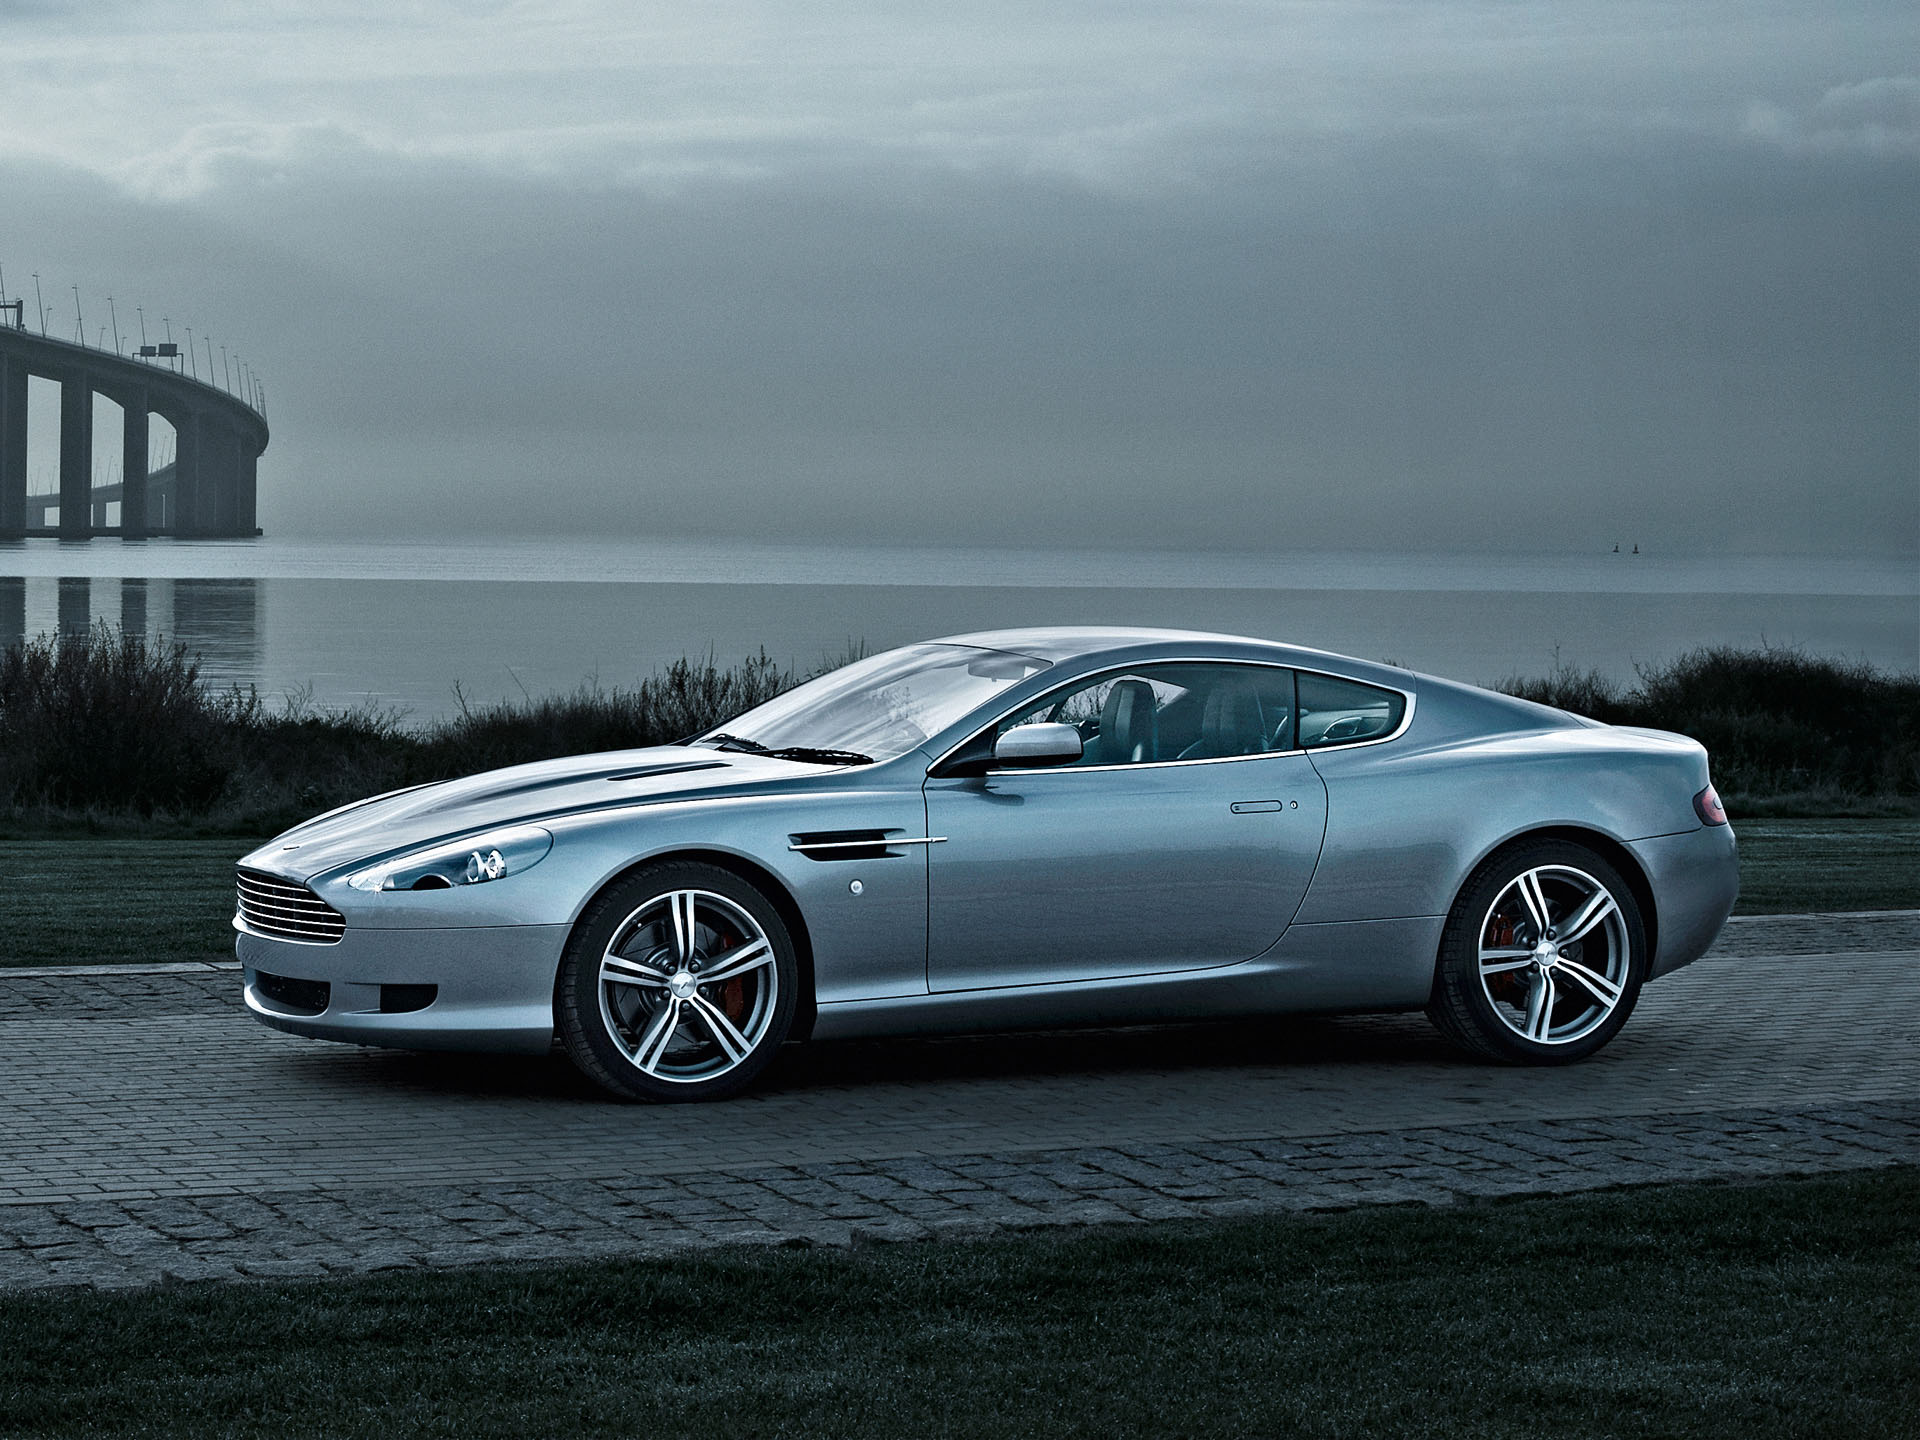 The Iconic Luxury: 2008 Aston Martin DB9